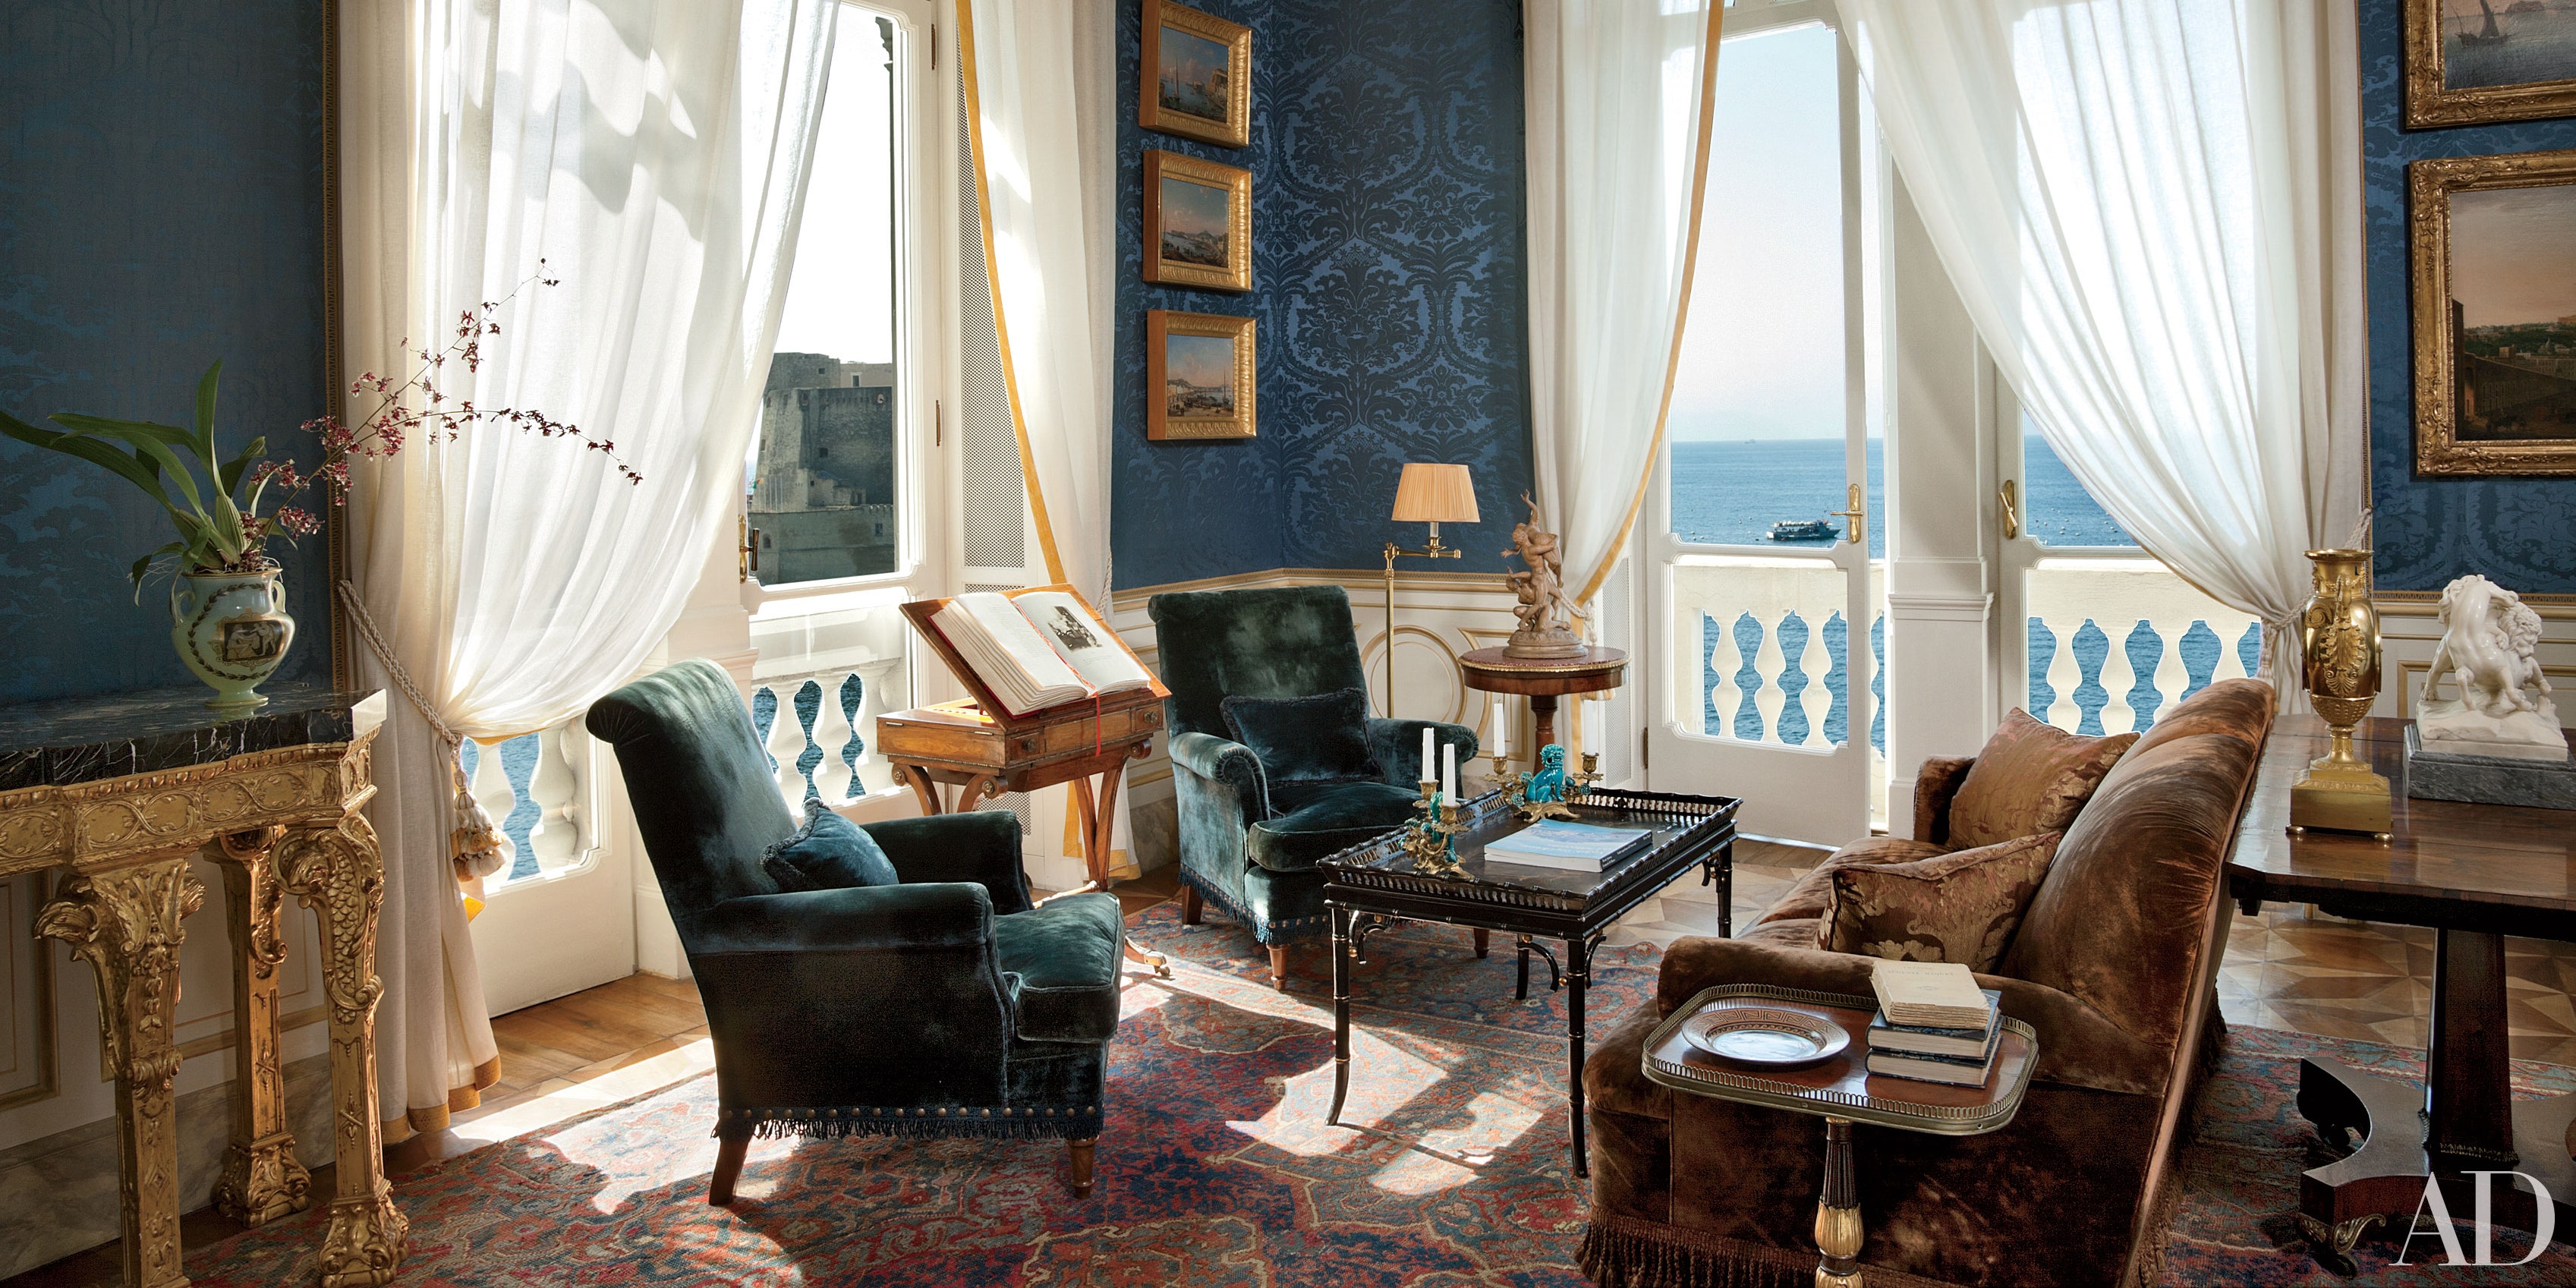 italian style furniture living room